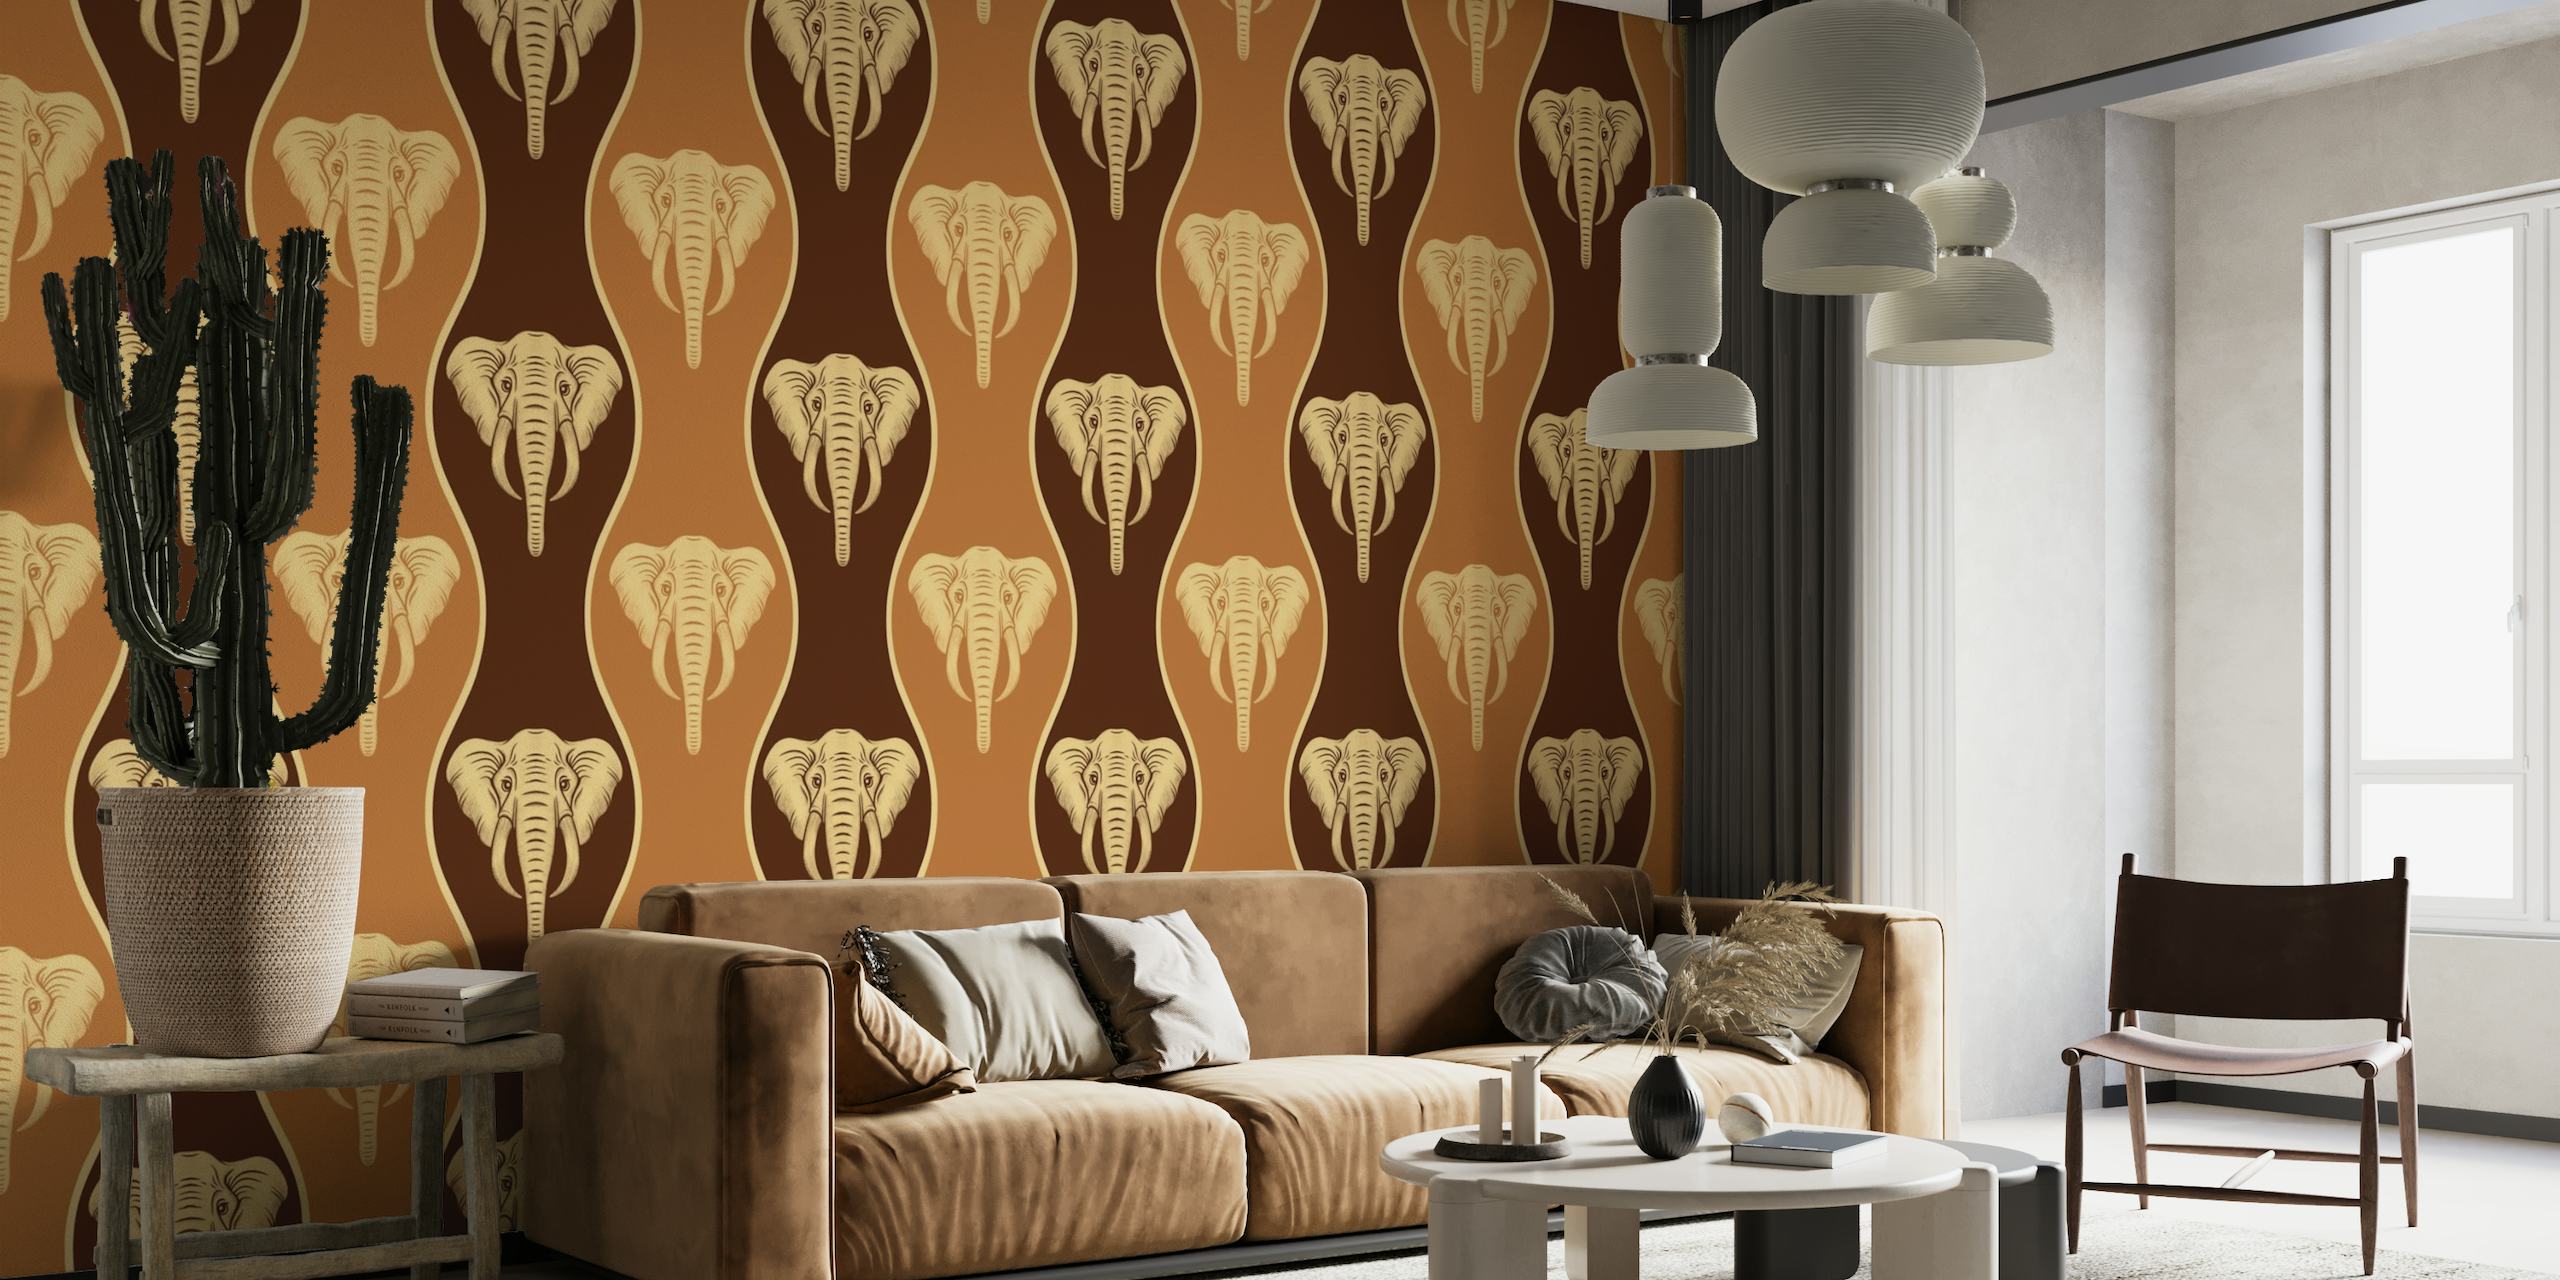 Natural African elephants wallpaper